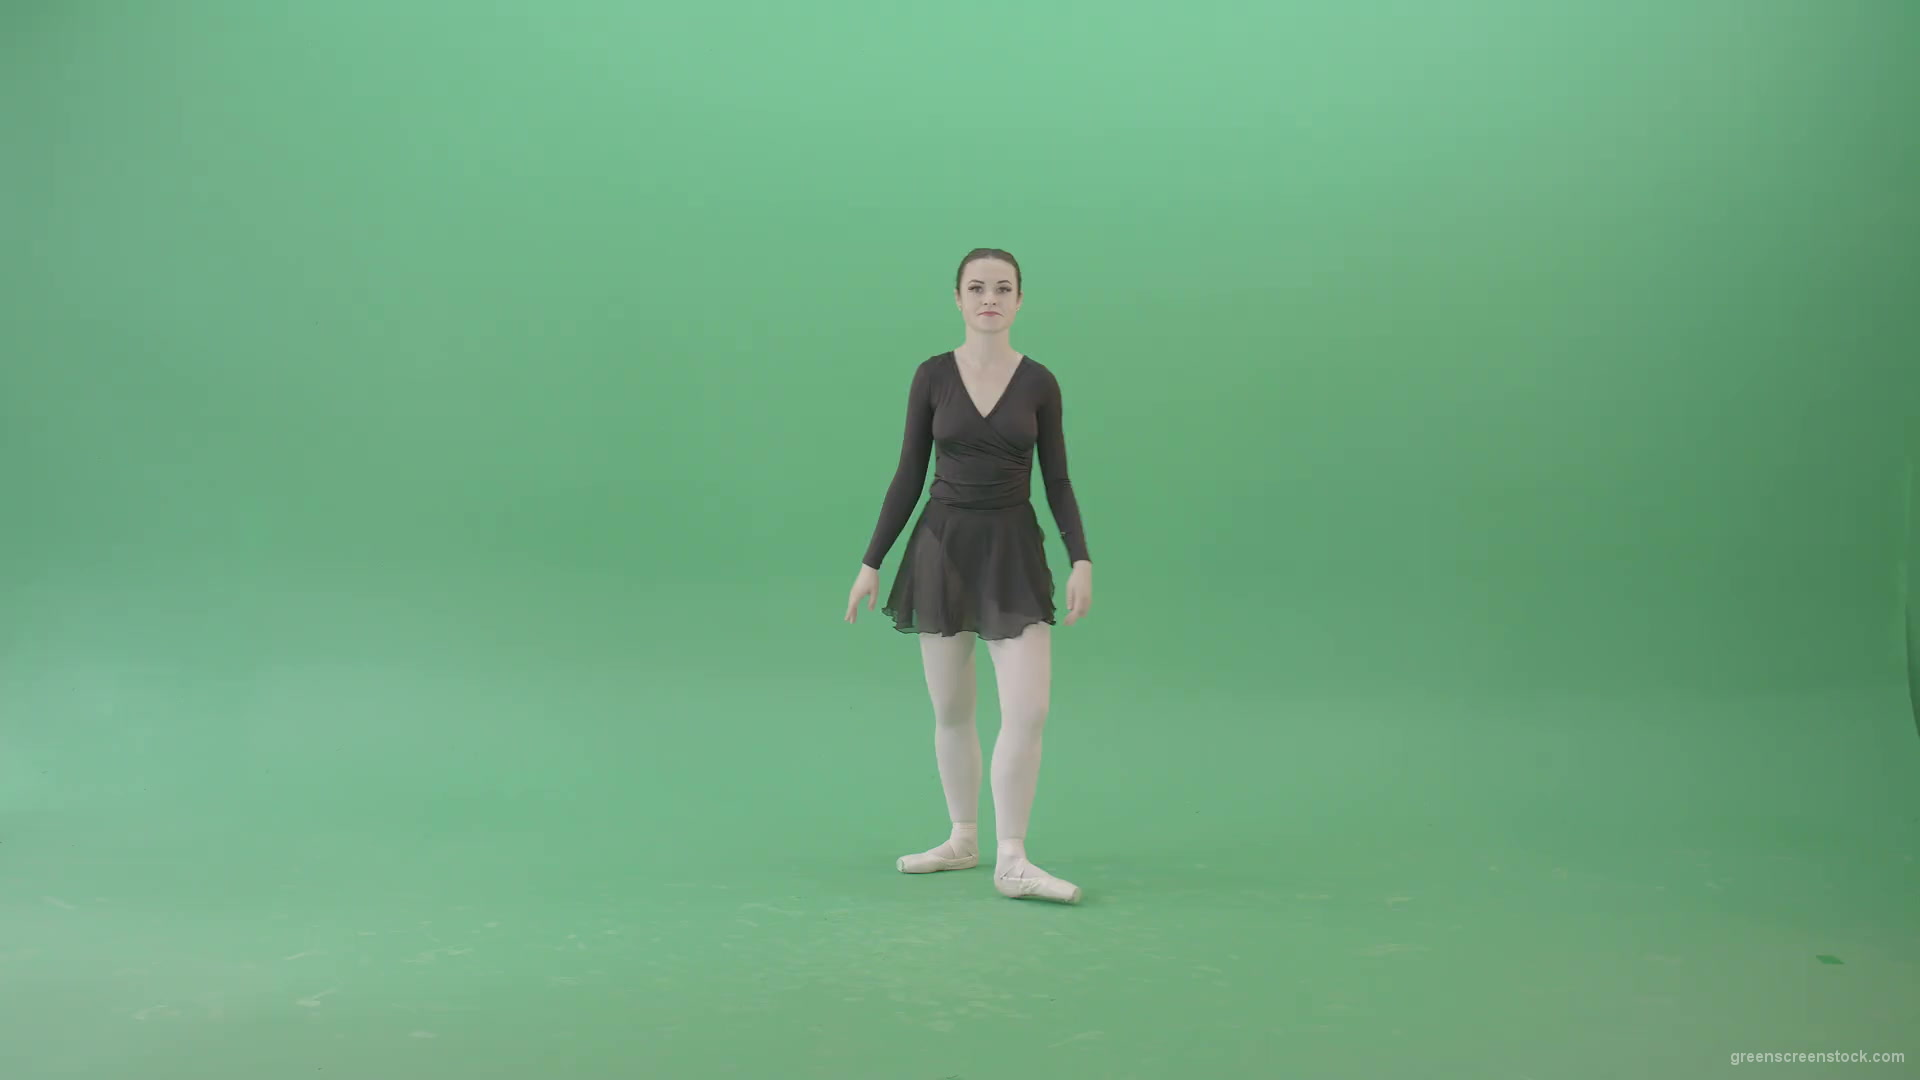 Green-Screen-Ballet-Girl-Ballering-makes-bow-reverence-in-black-dress-4K-Video-Footage-1920_001 Green Screen Stock